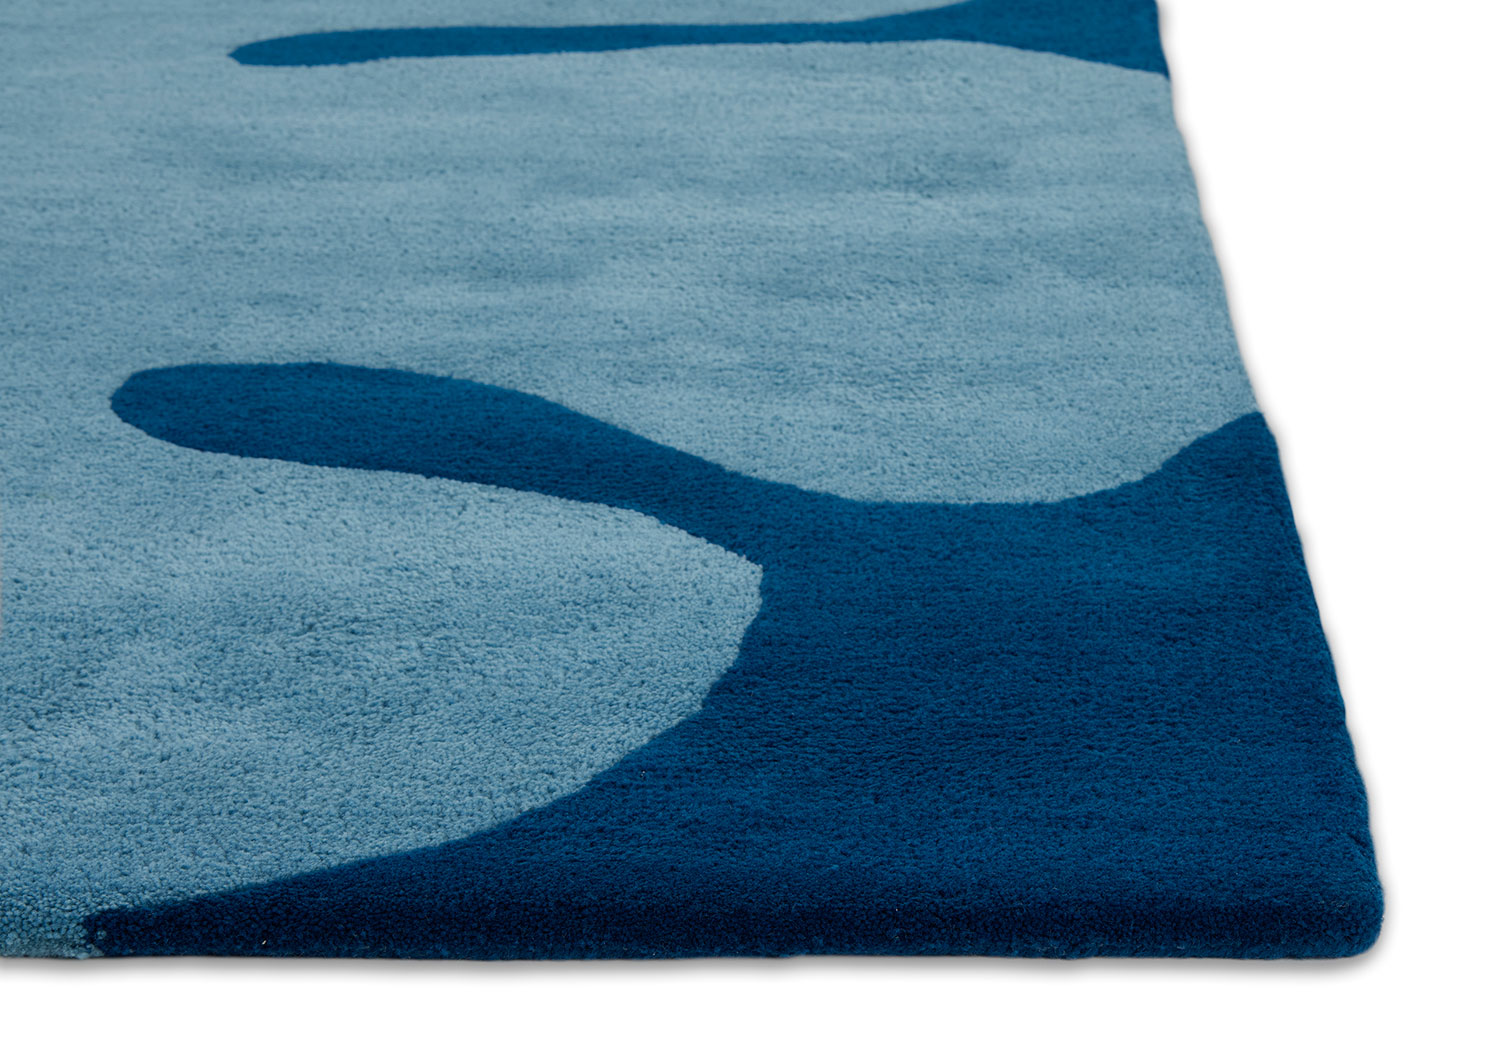 A detail of Angela Adams Astrud Splash blue area rug